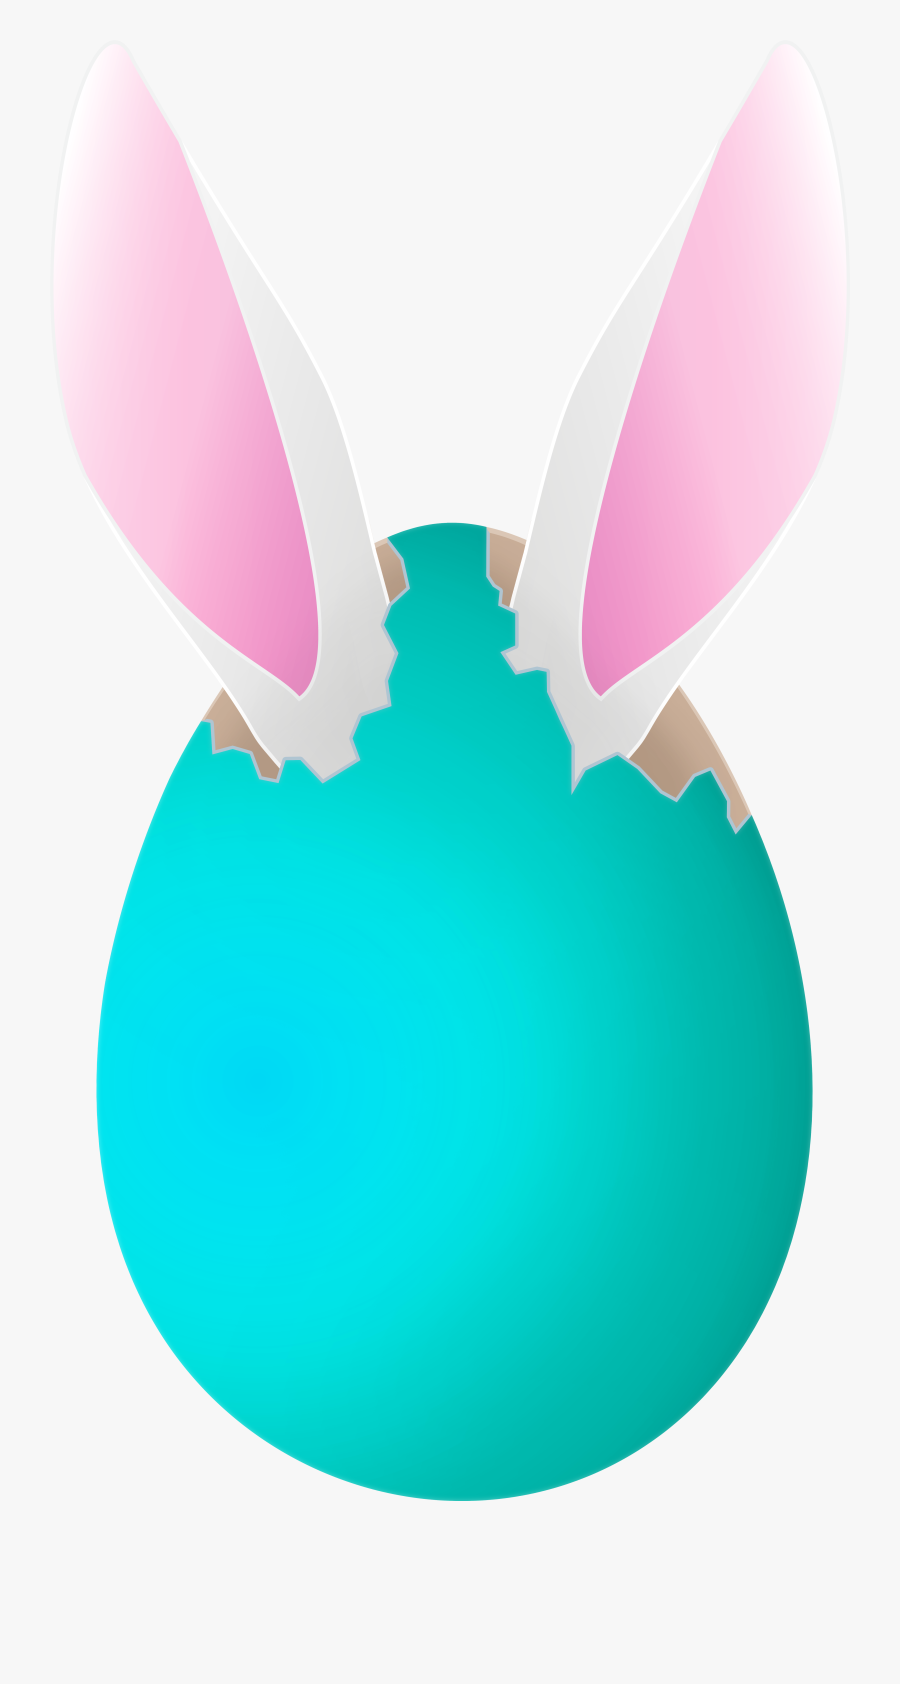 Bunny Ears Clipart Blue - Illustration, Transparent Clipart